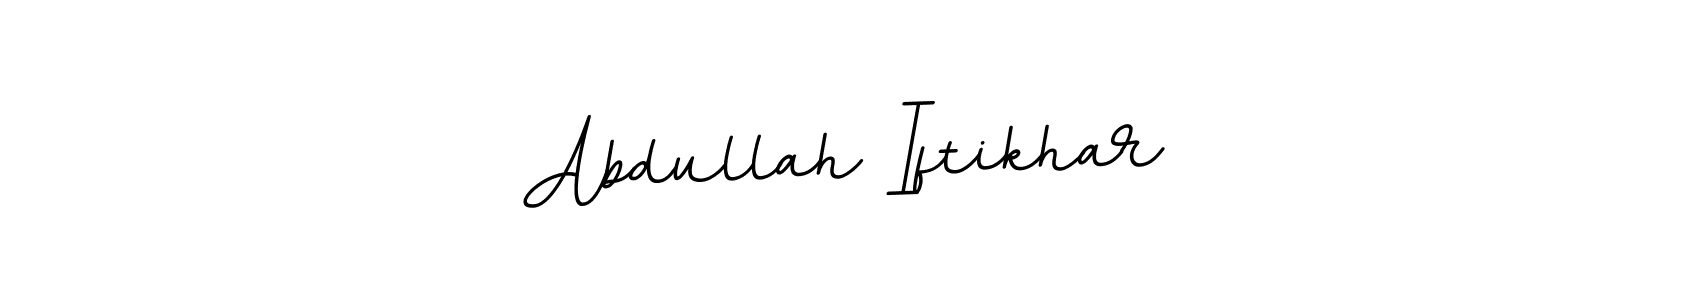 How to Draw Abdullah Iftikhar signature style? BallpointsItalic-DORy9 is a latest design signature styles for name Abdullah Iftikhar. Abdullah Iftikhar signature style 11 images and pictures png